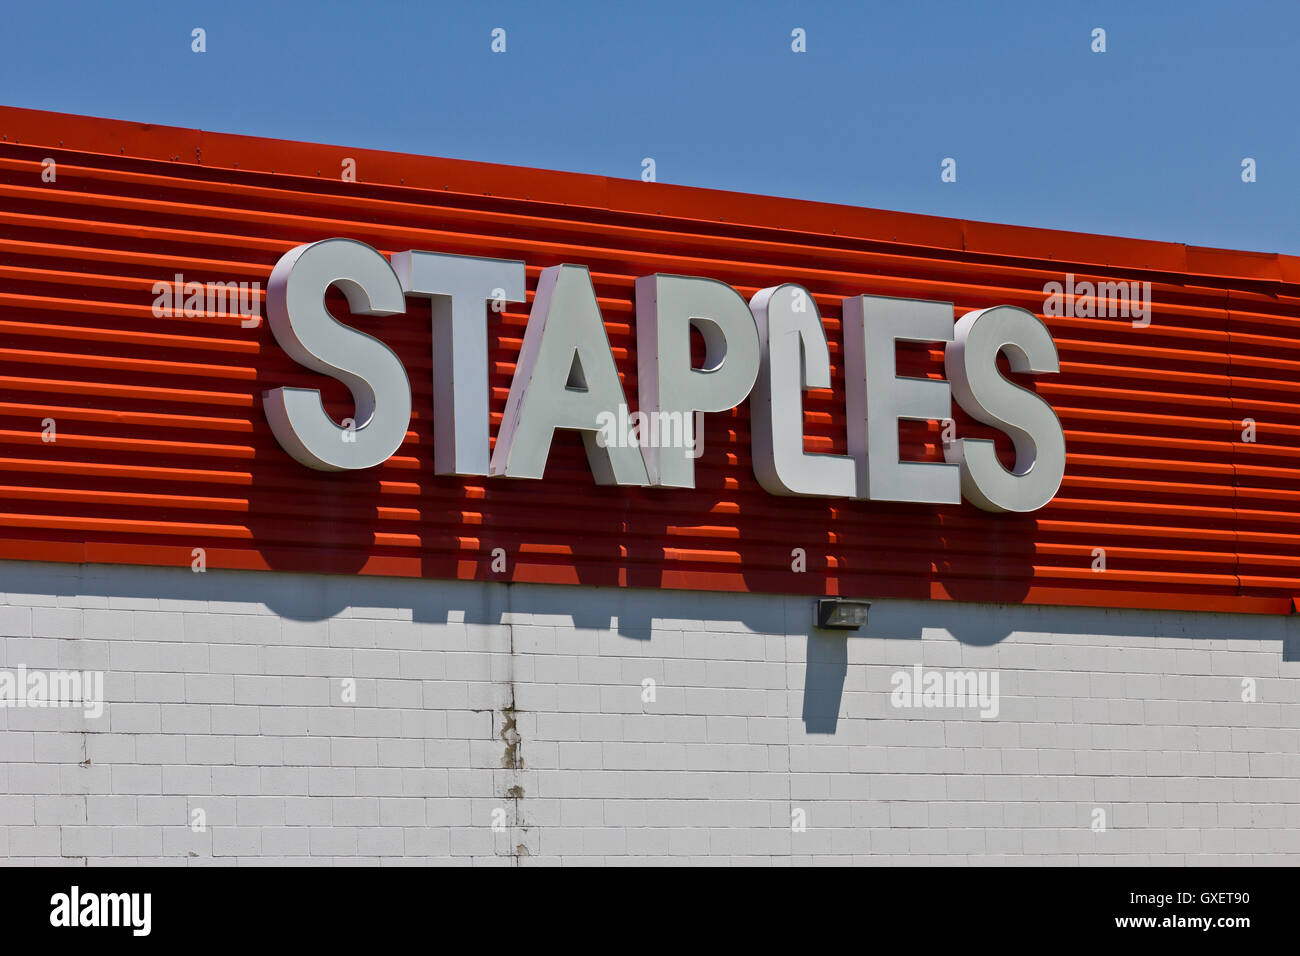 Indianapolis Circa June 2016 Staples Inc Retail Location Staples Is GXET90 